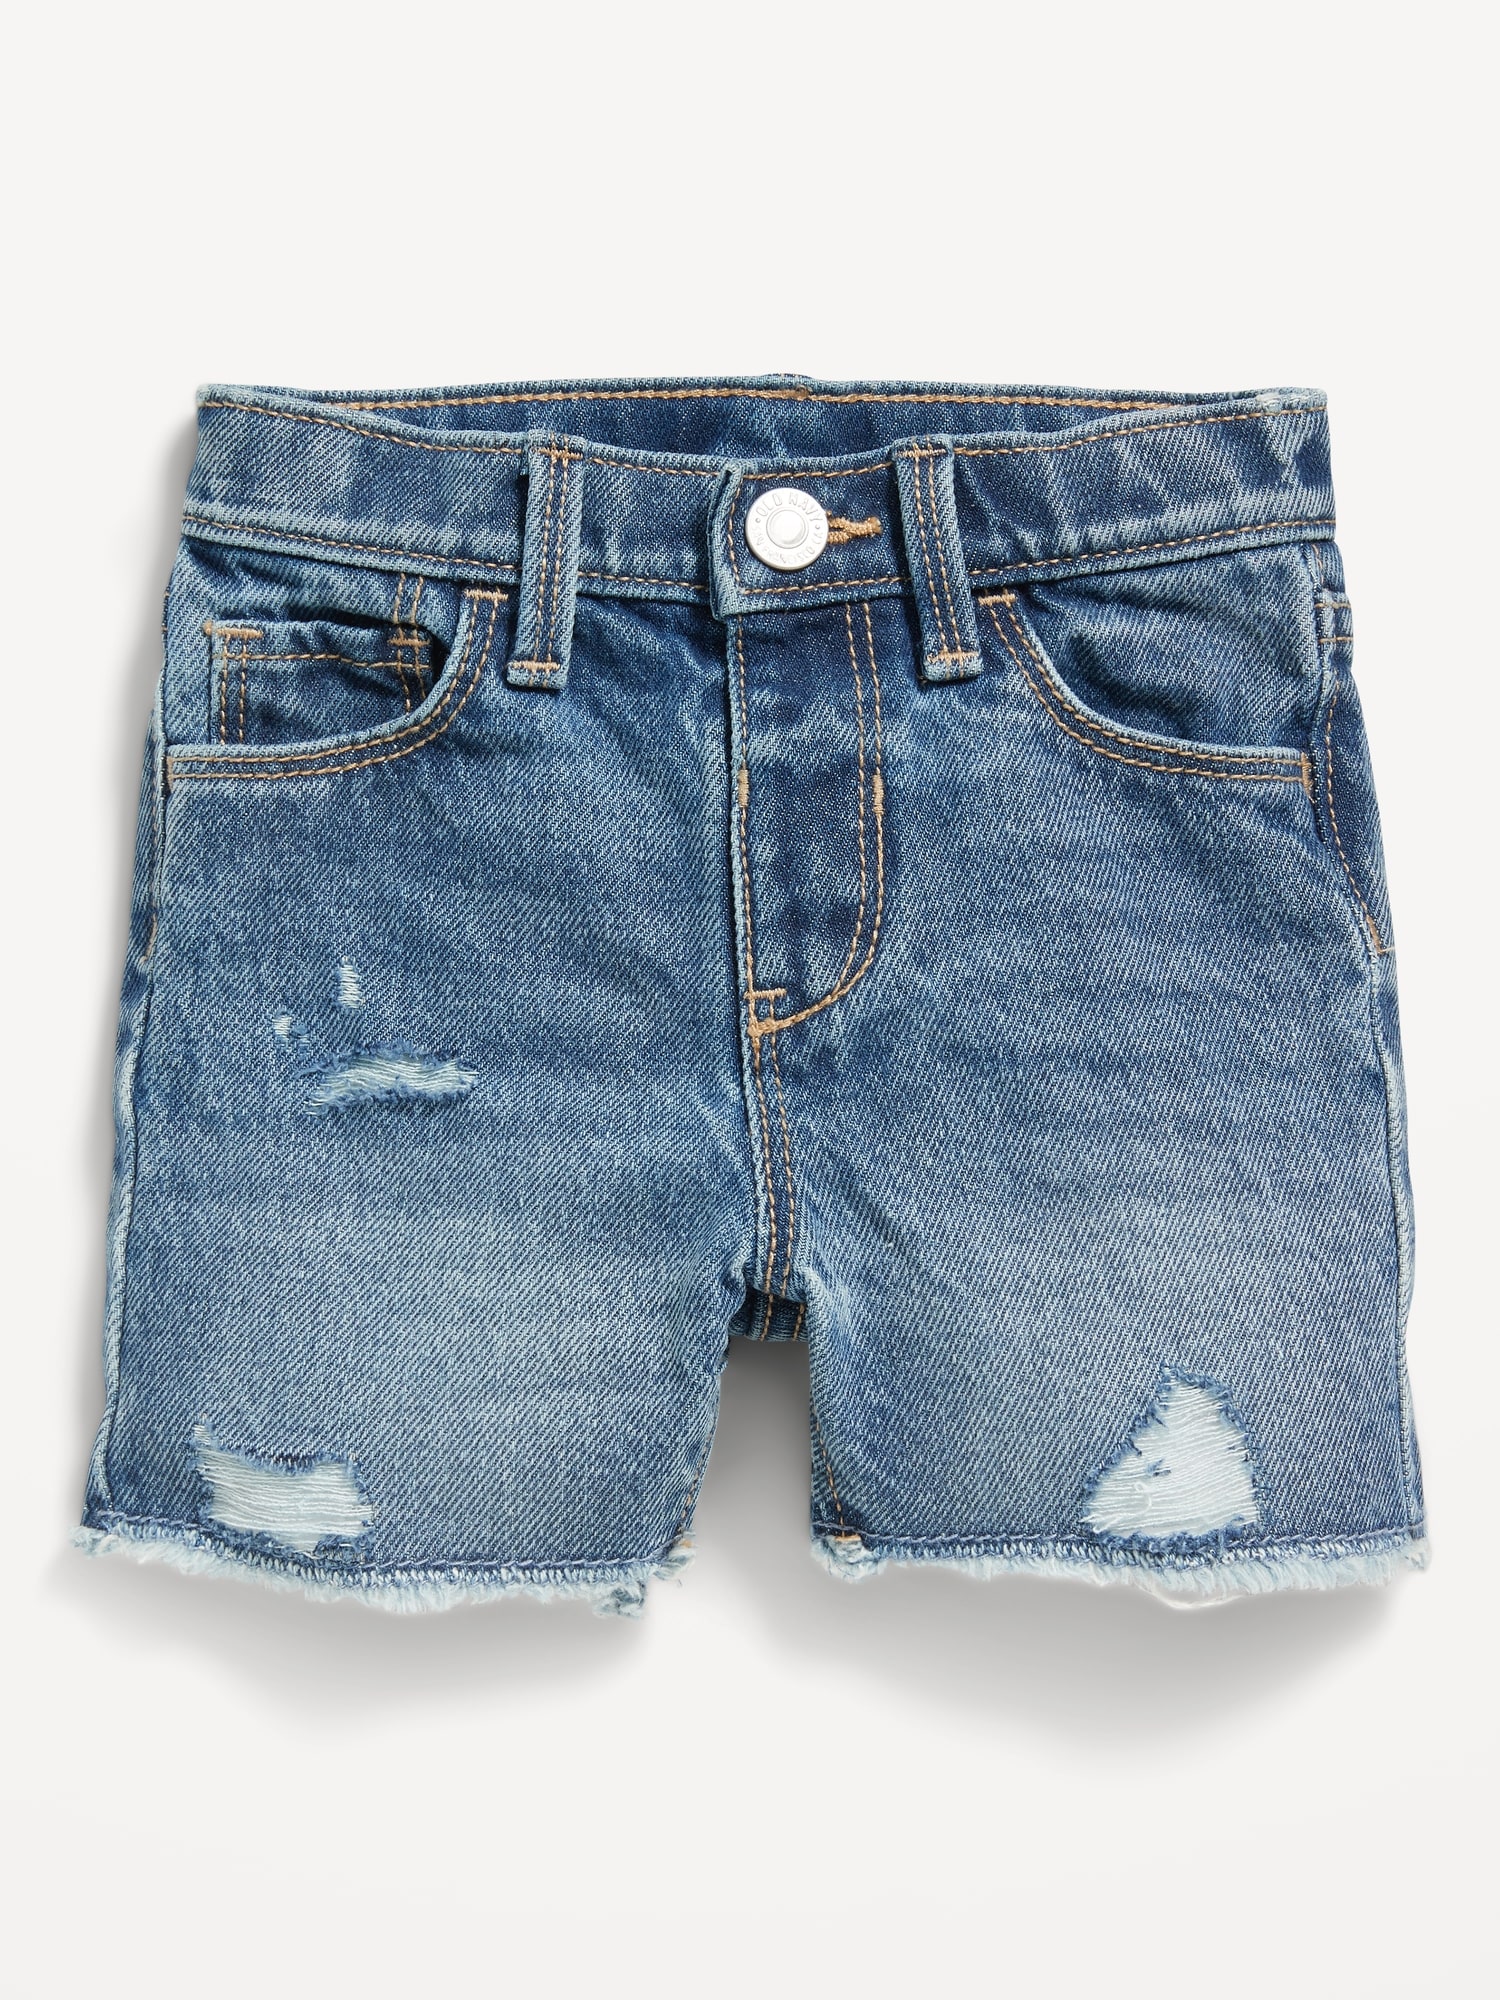 Buy luvamia Girls Ripped Denim Shorts Frayed Raw Hem Jean Shorts 4-13 Years  Dark Blue Size XX-Large (12-13 Years) at Amazon.in